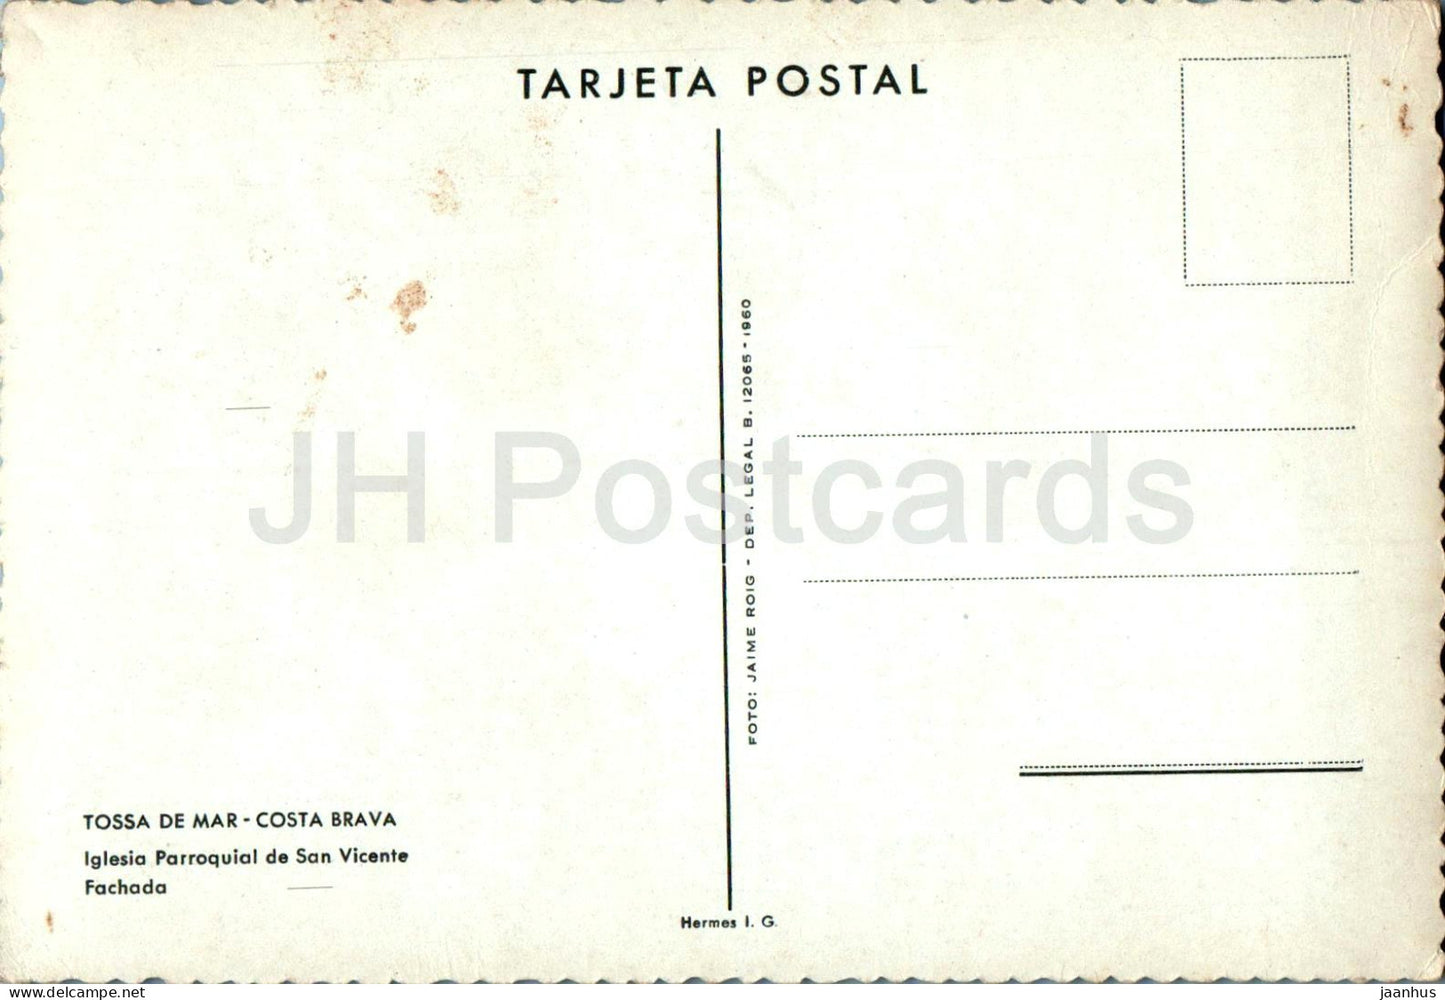 Tossa de Mar - Costa Brava - Iglesia Parroquial de San Vicente - Fachada - church - old postcard - Spain - unused